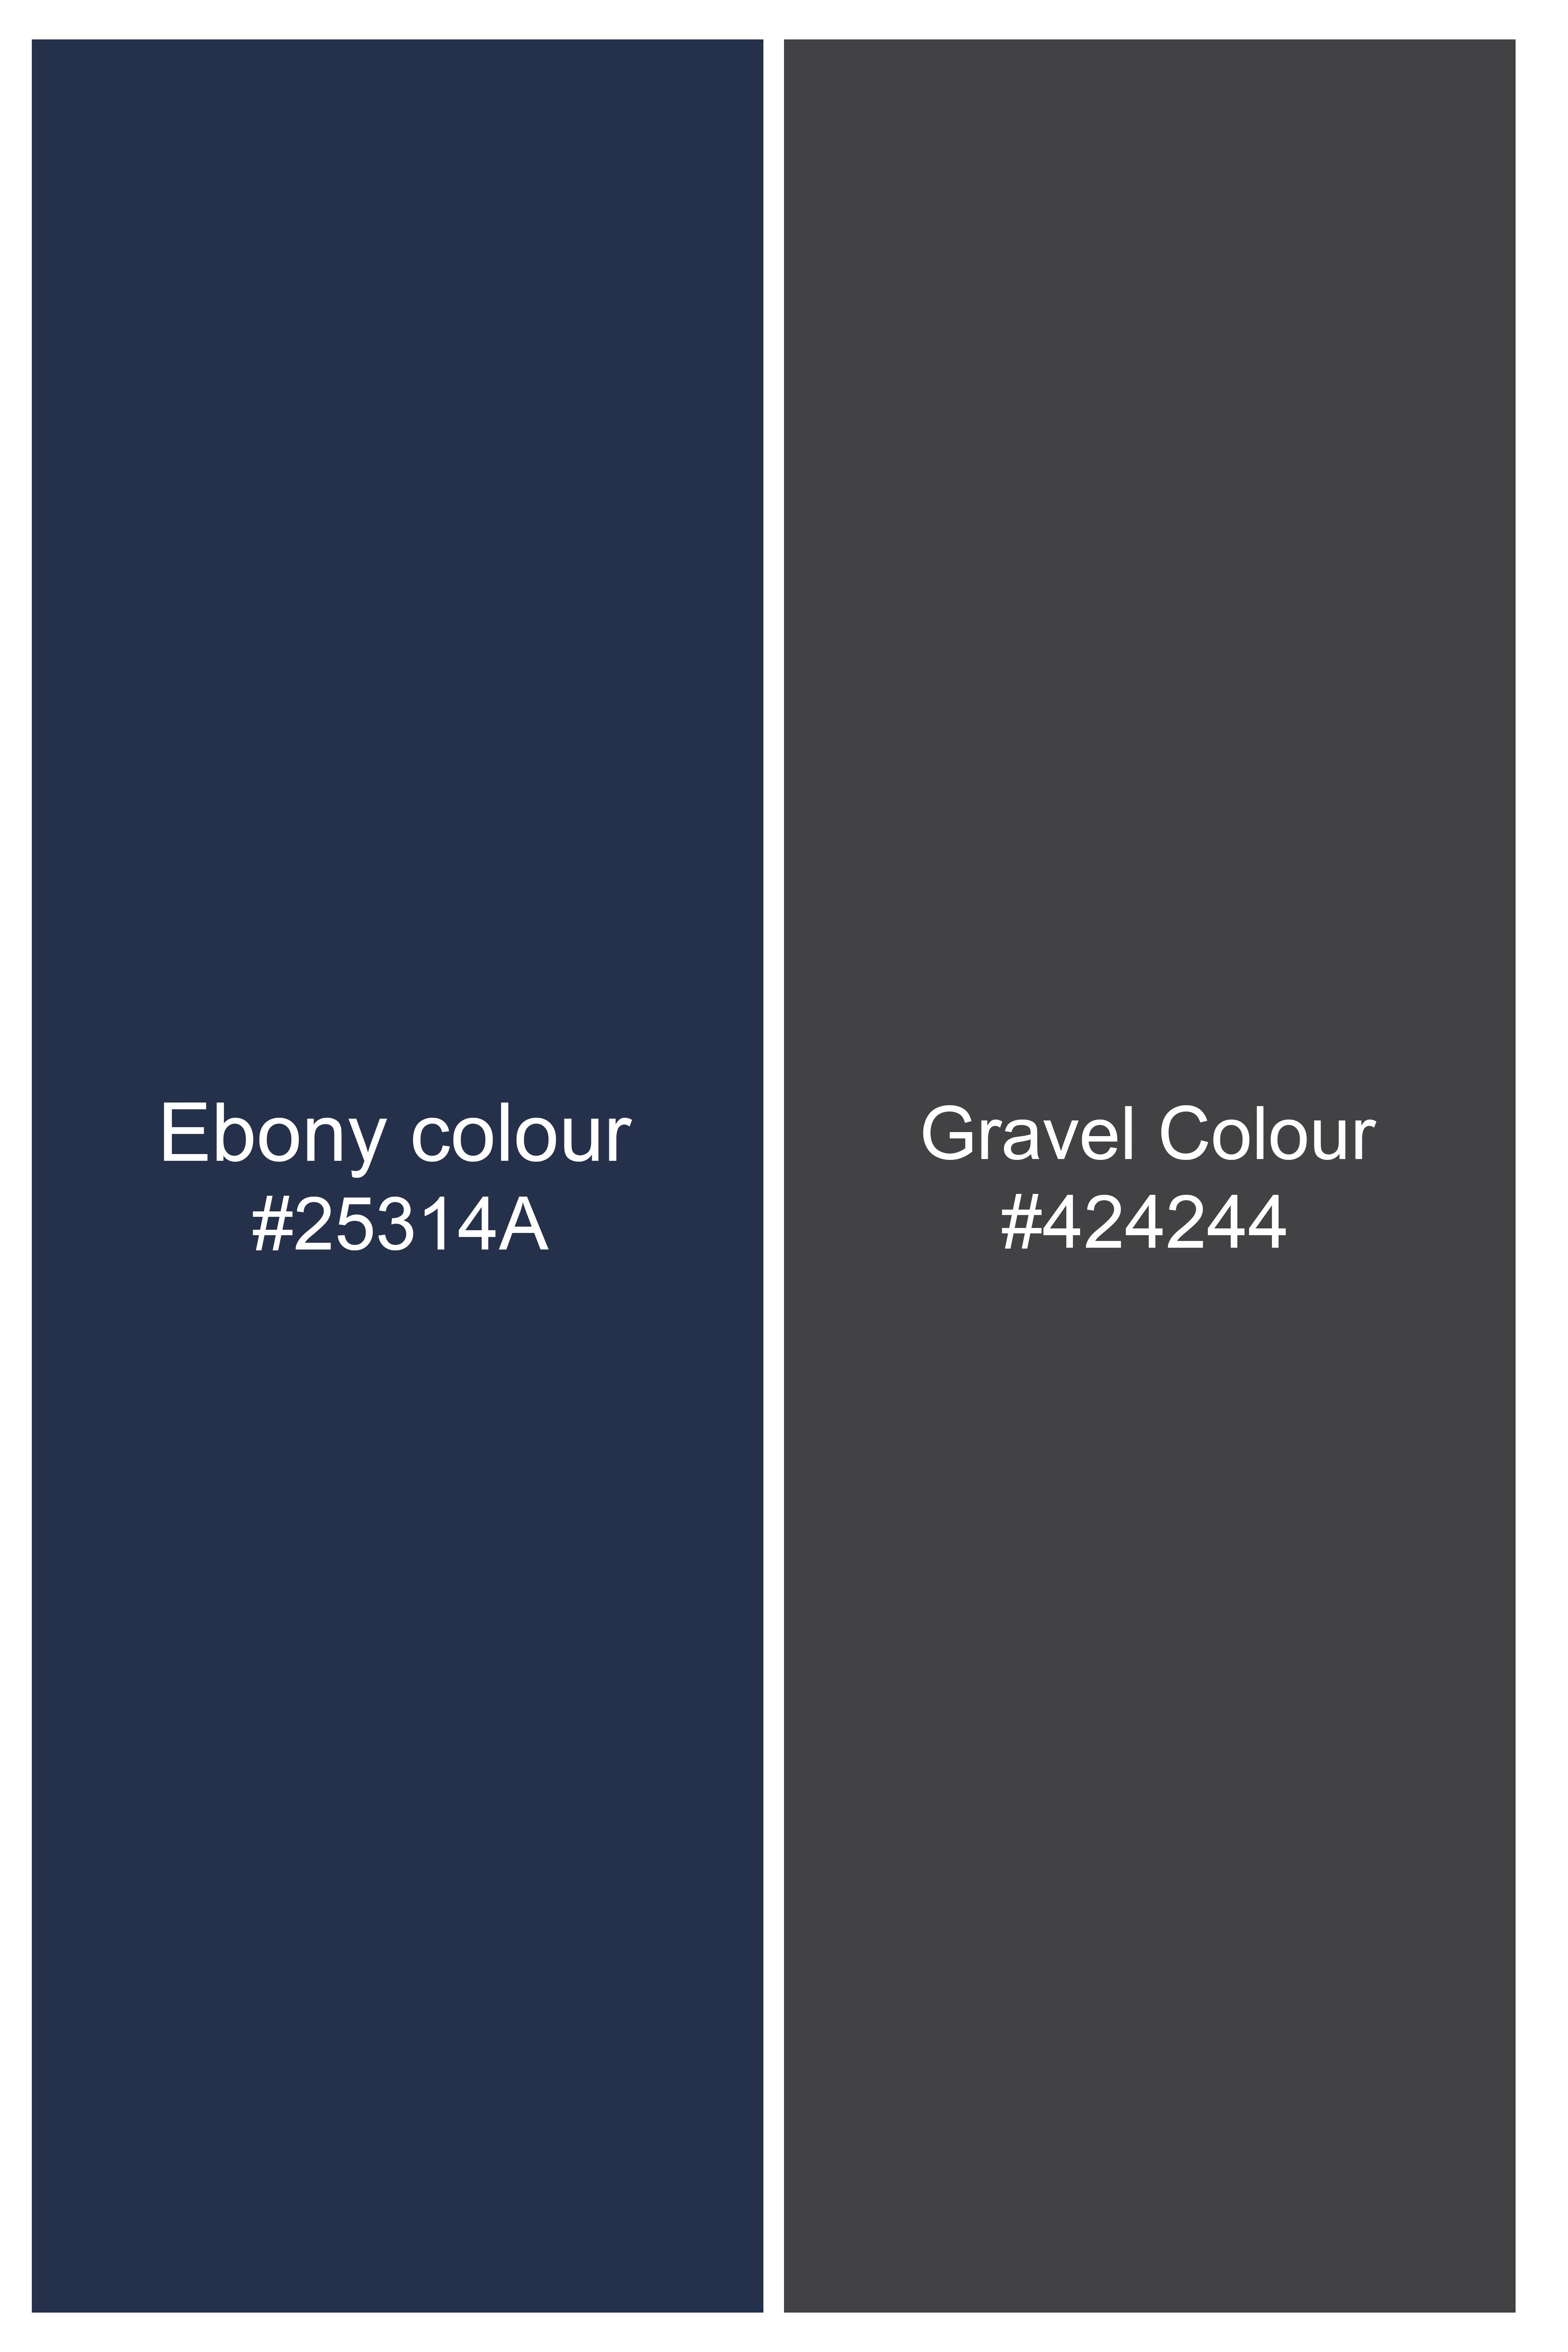 Ebony Clay Blue and Gravel Gray Plaid Tweed Pant T2927-SW-28, T2927-SW-30, T2927-SW-32, T2927-SW-34, T2927-SW-36, T2927-SW-38, T2927-SW-40, T2927-SW-42, T2927-SW-44